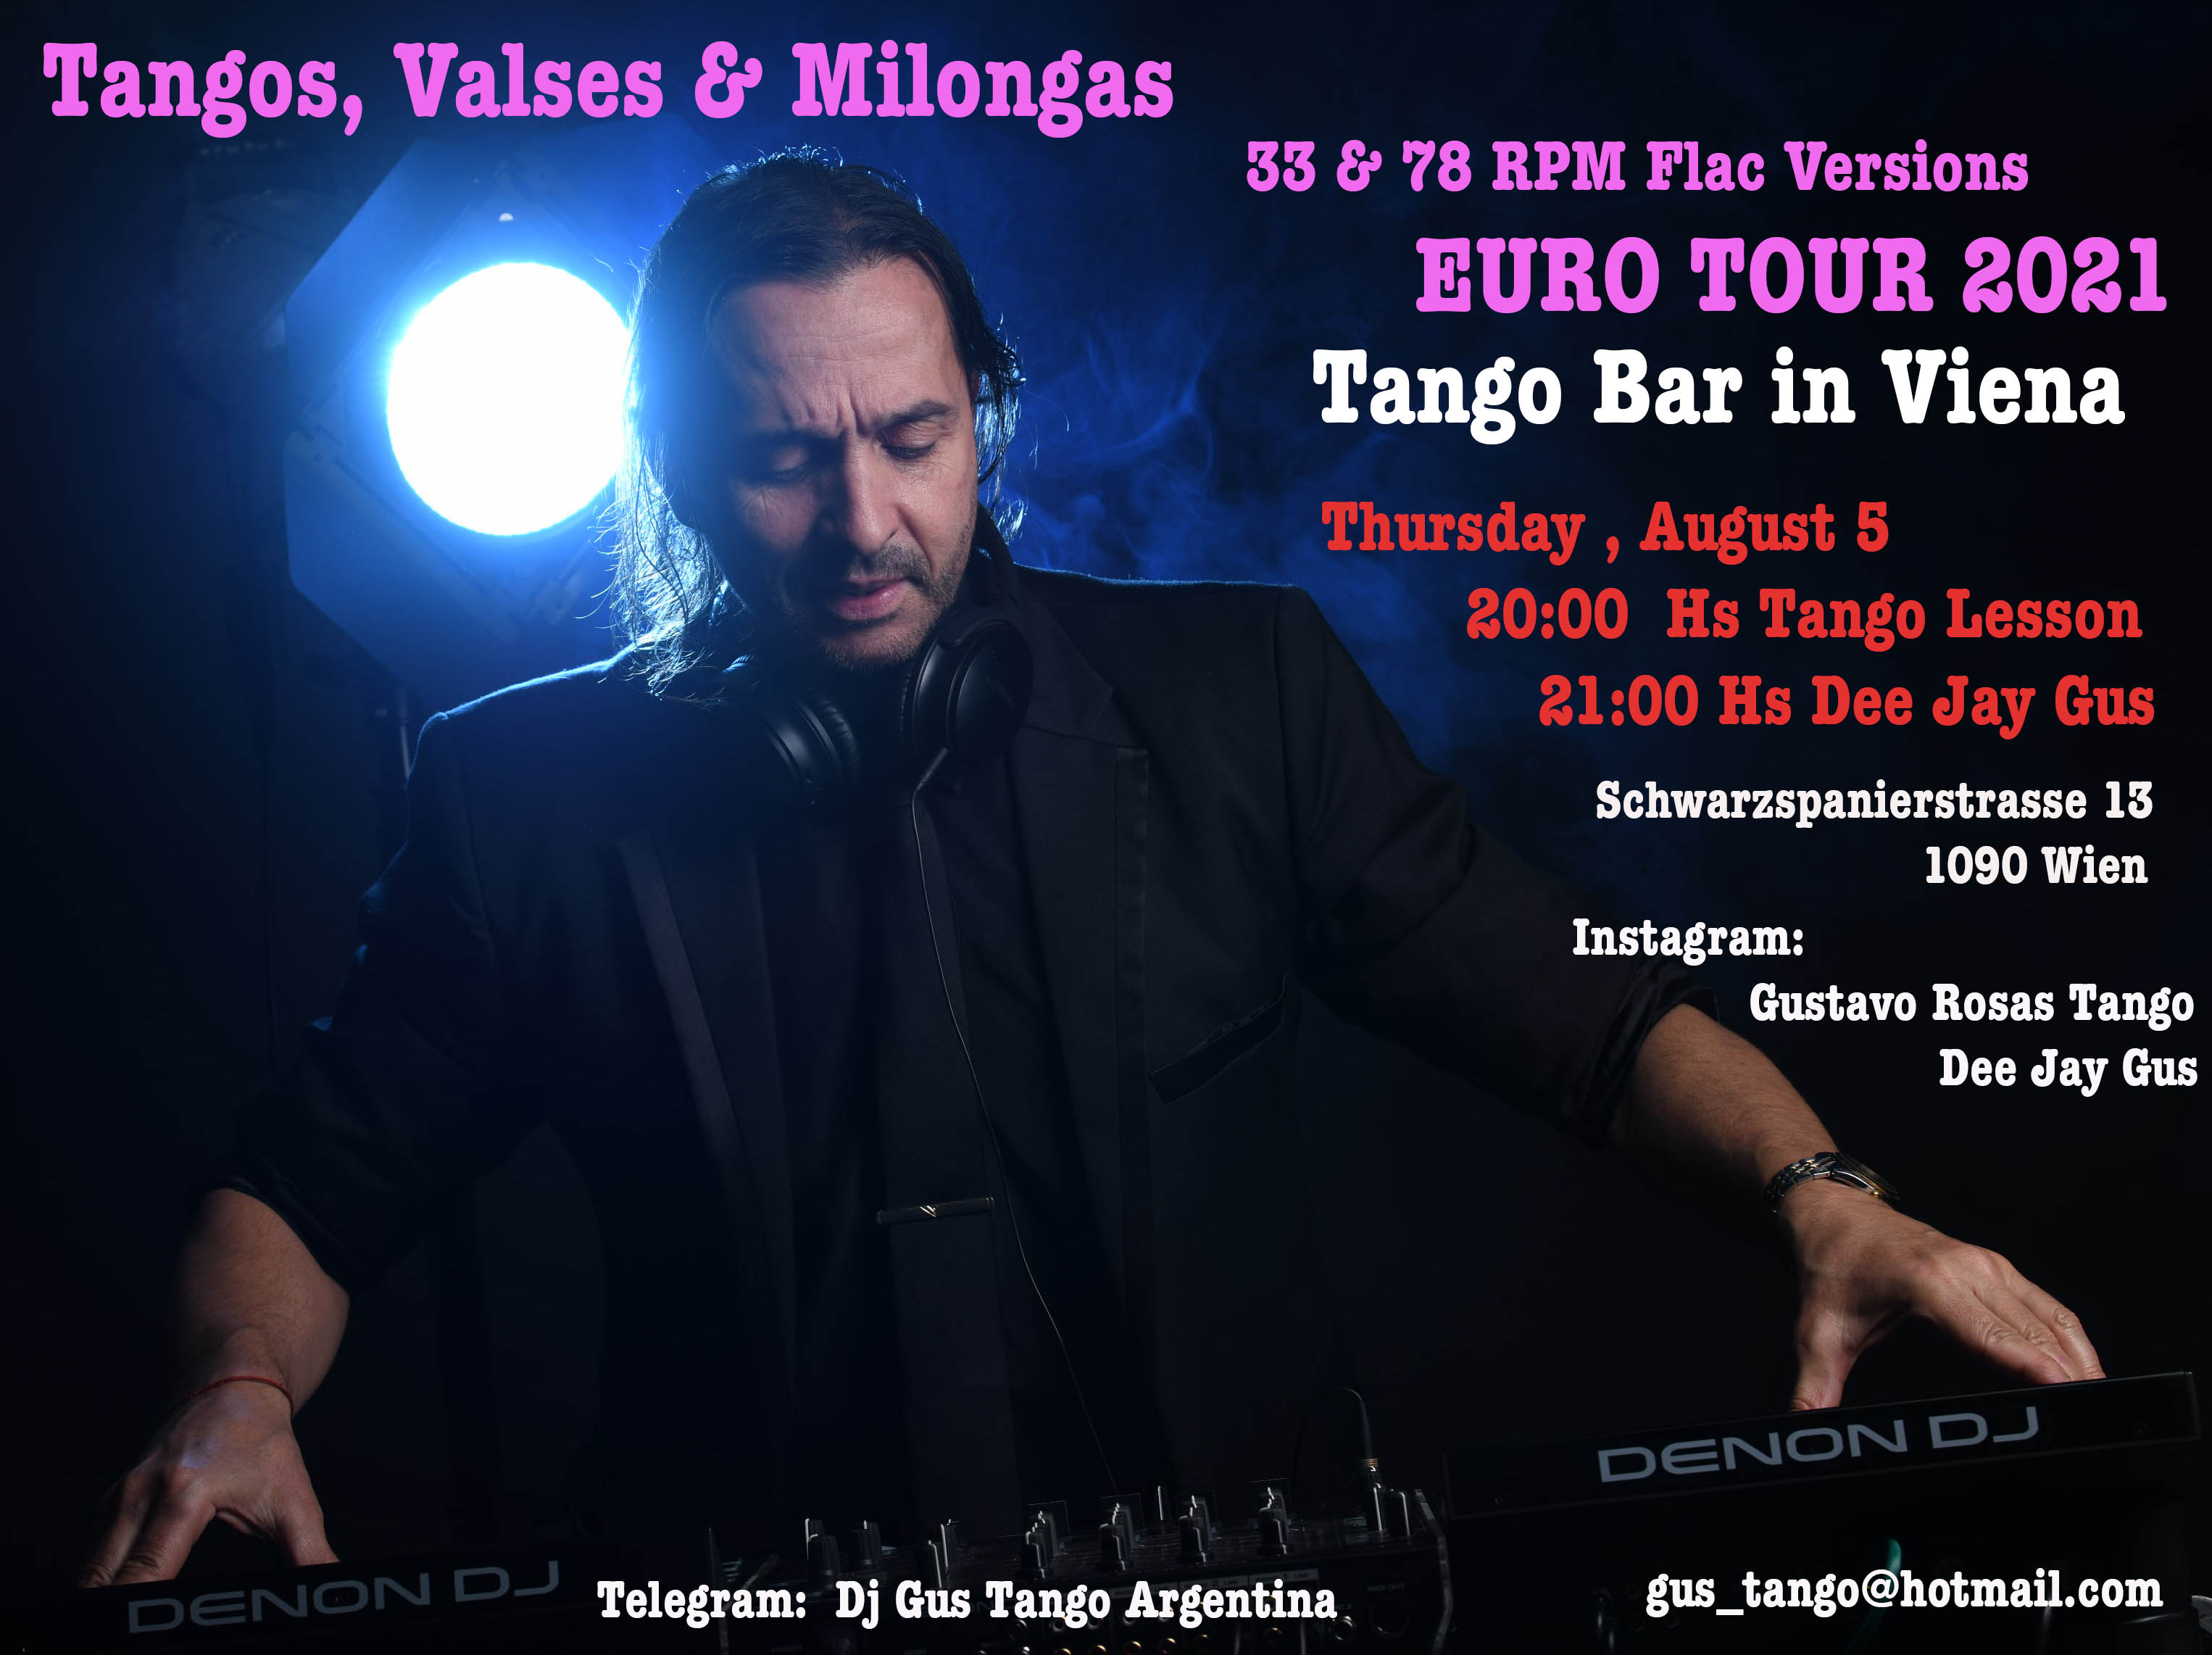 tango-bar-viena-promo-dj-gus-euro-tour2021.jpg